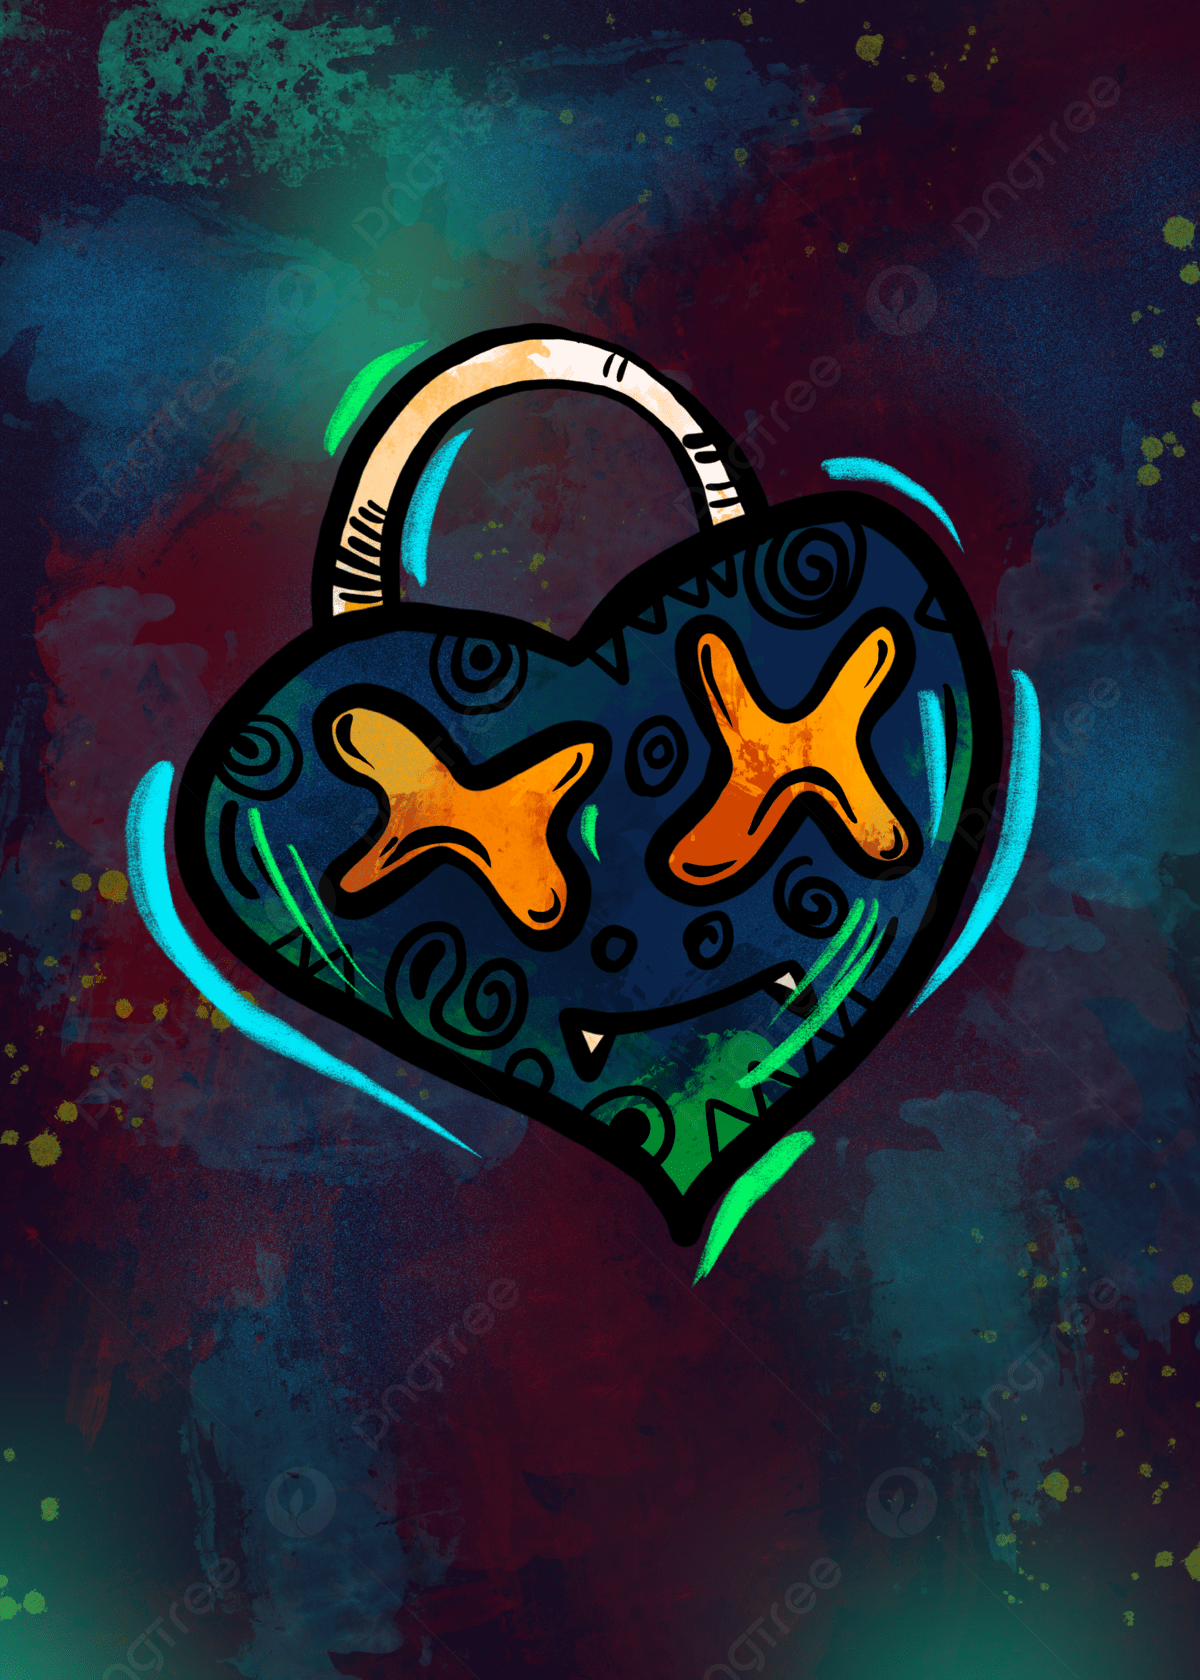 An artistic image of a heart shaped padlock - Punk